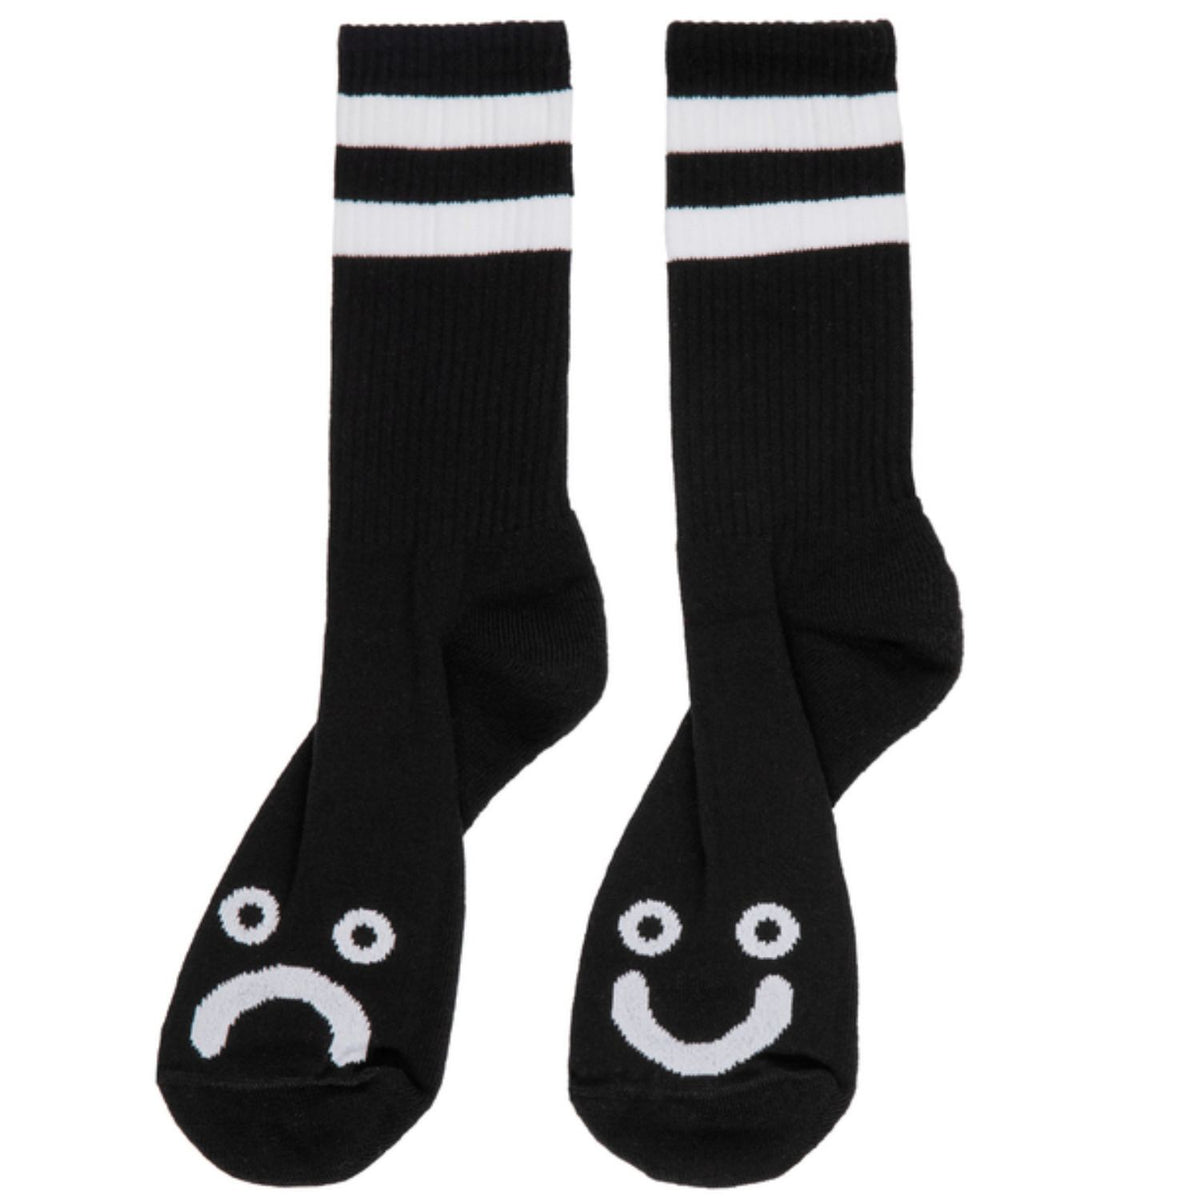 Polar - Happy Sad Socks - Black - Size 39-42